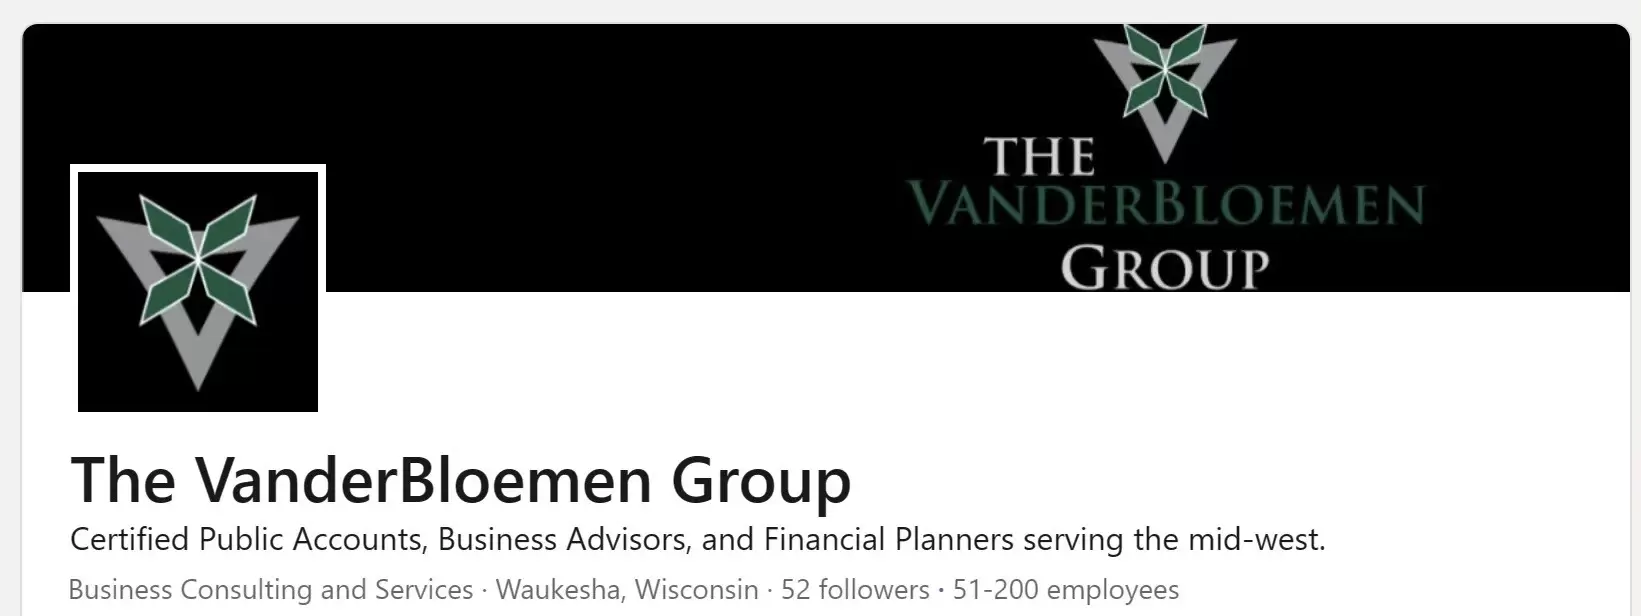 The Vanderbloemen Group on LinkedIn